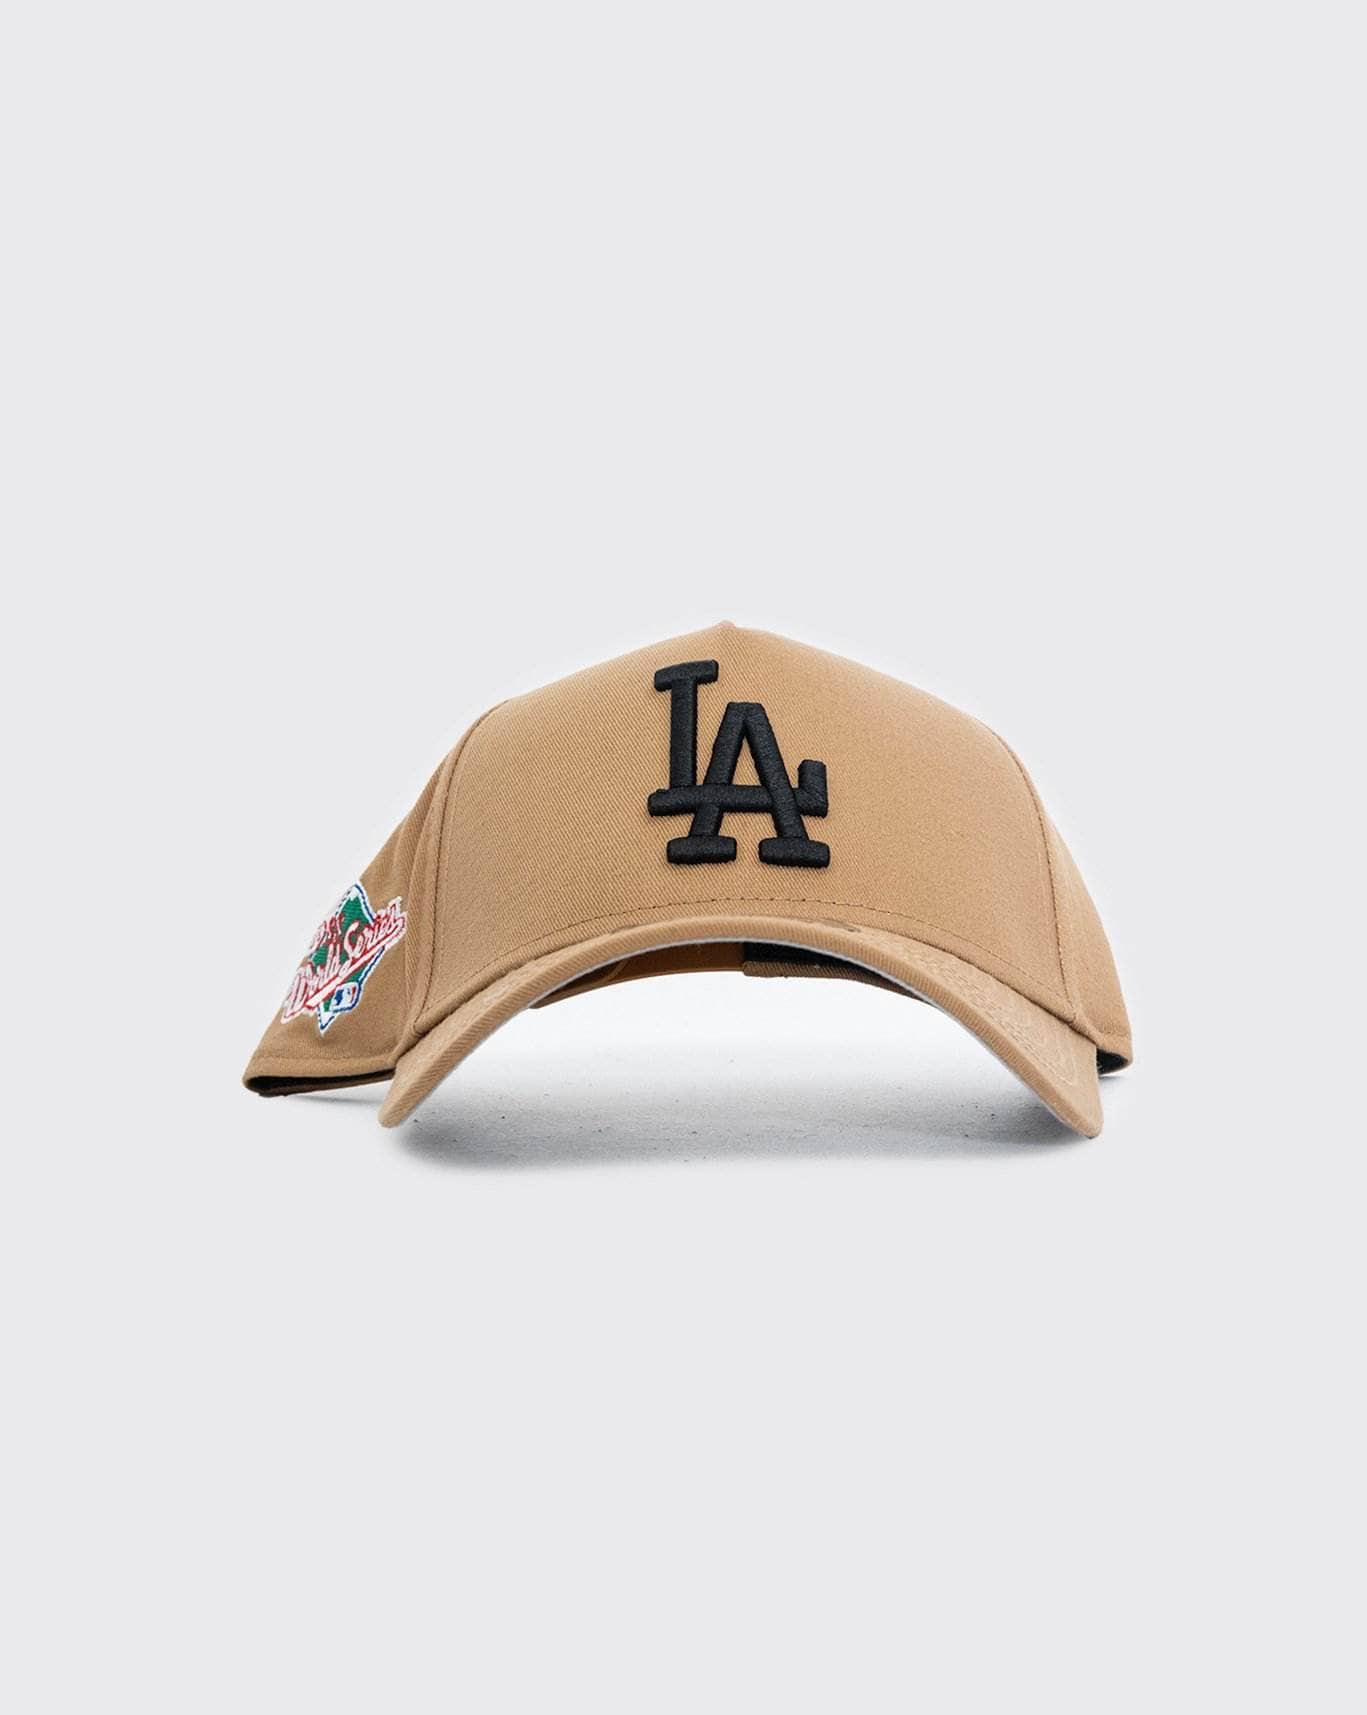 New Era Los Angeles Dodgers 940 A-Frame Wheat Cap